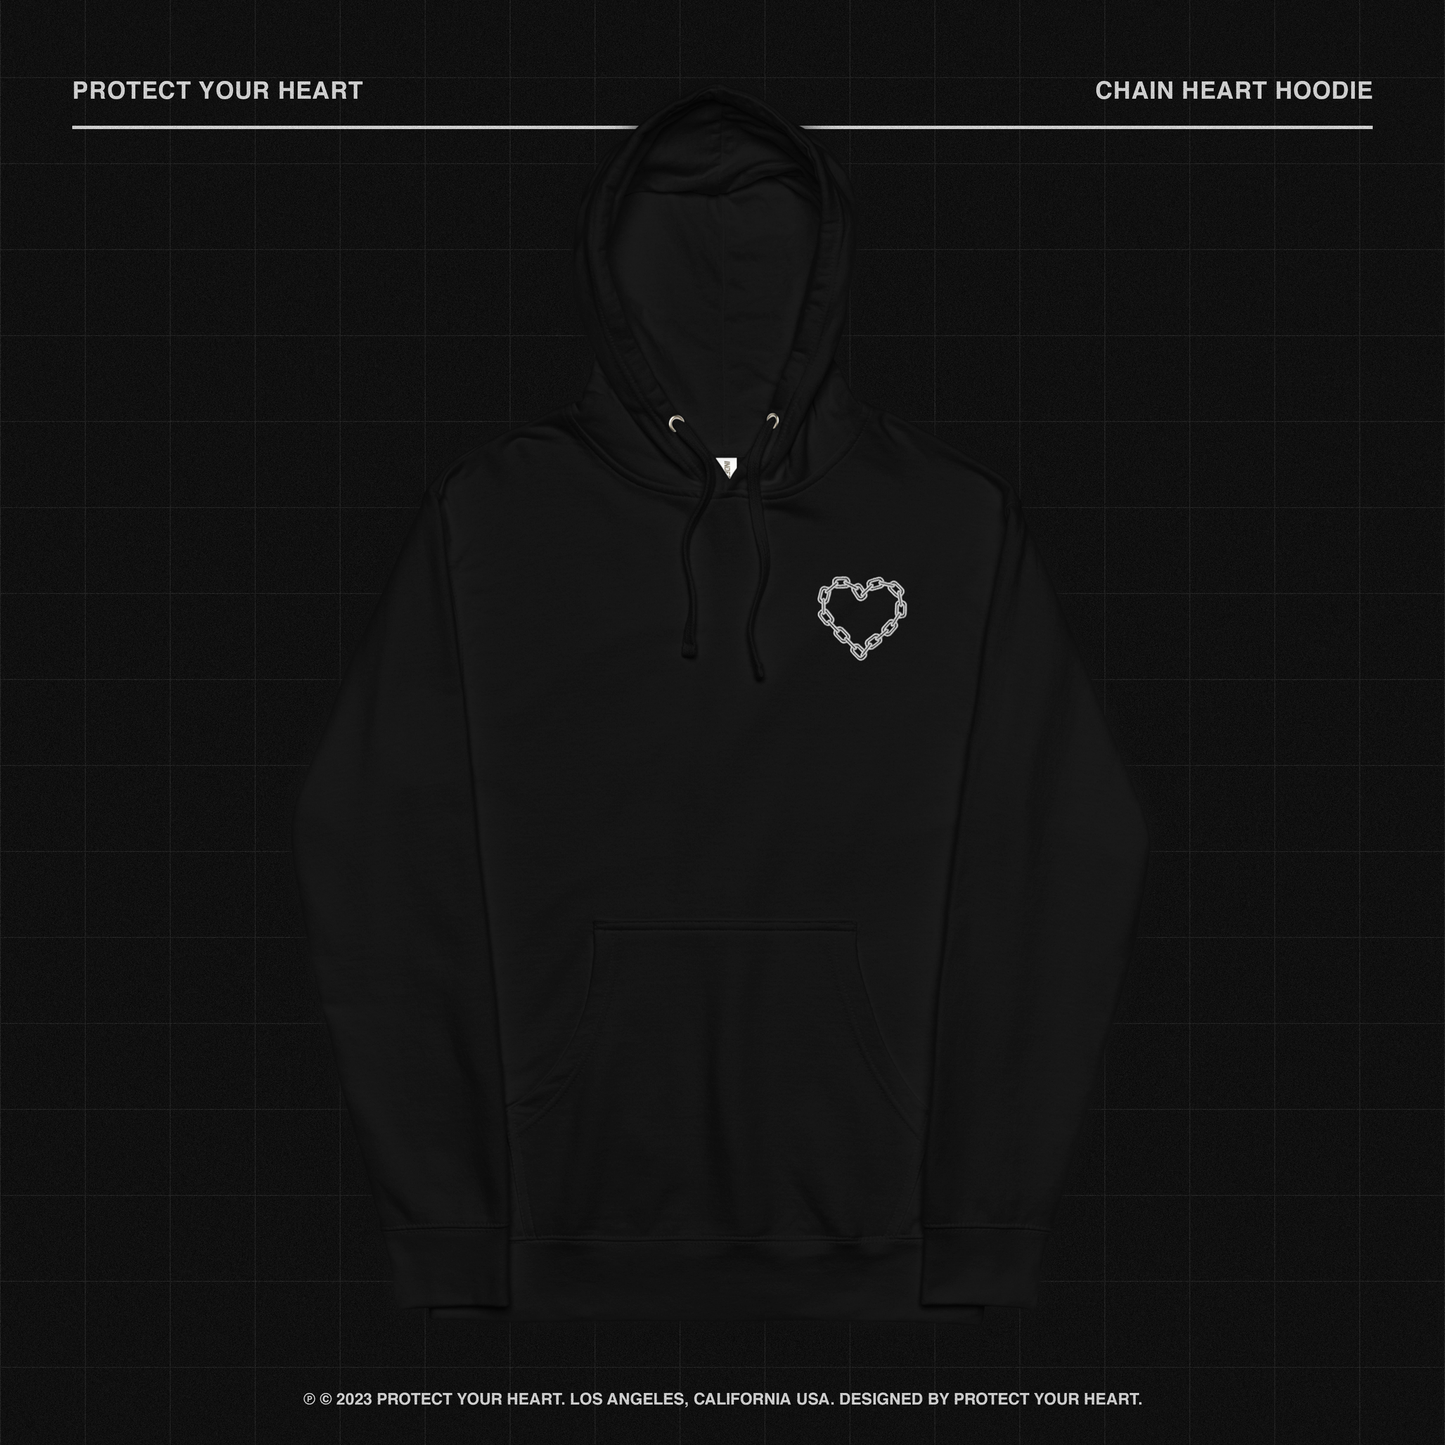 CHAIN HEART hoodie